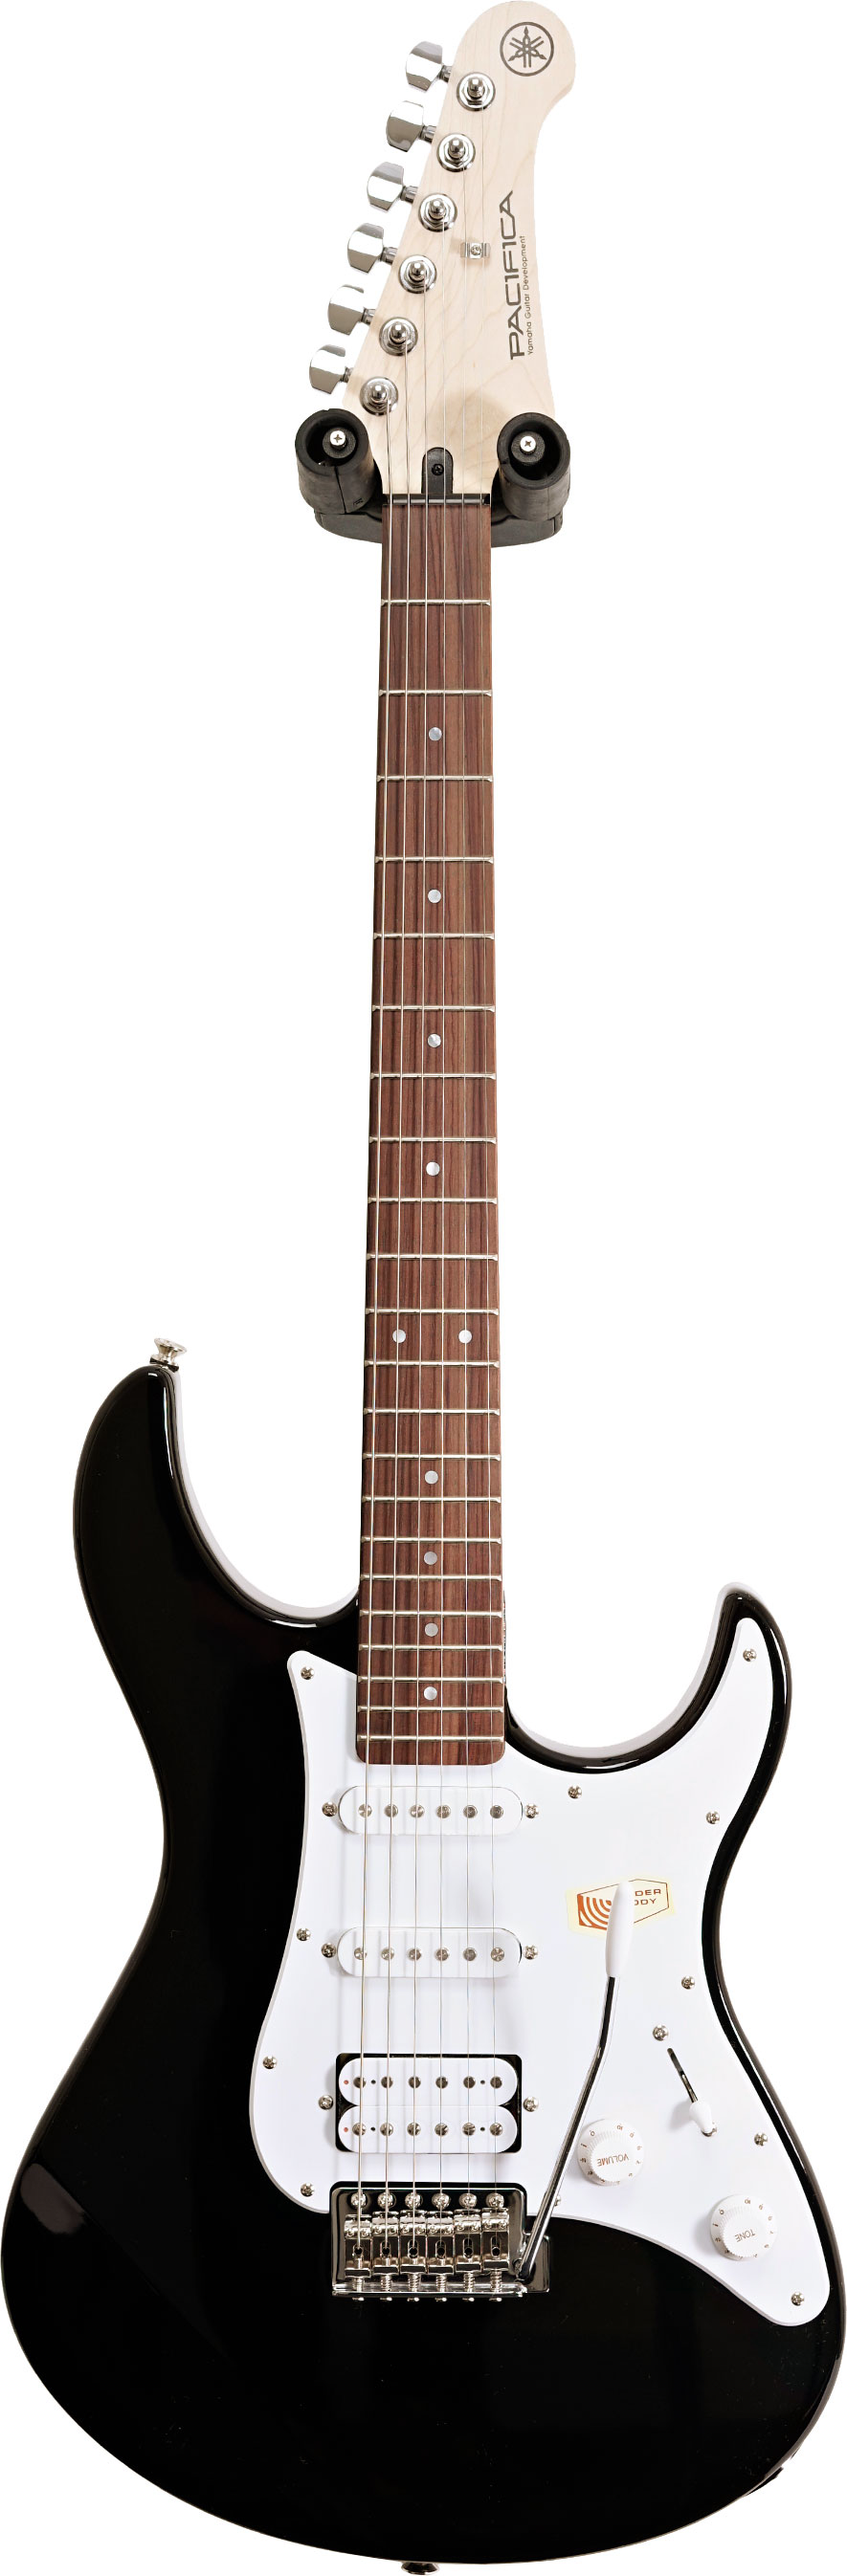 Yamaha Pacifica 112J II Black | guitarguitar